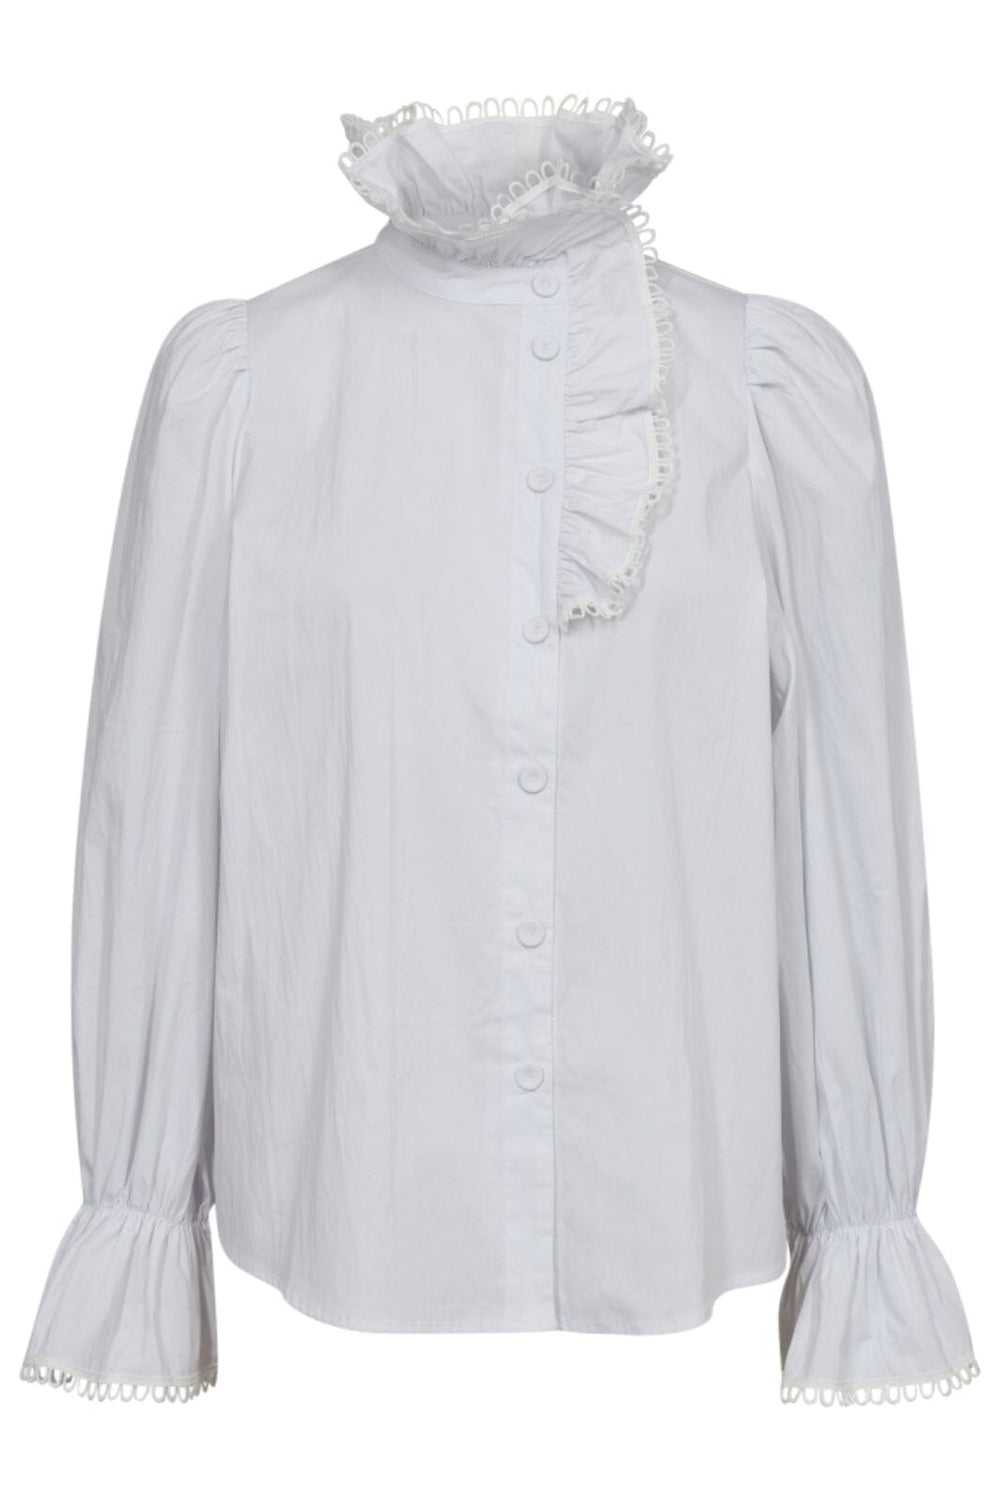 Co´couture - Cocc Crisp Frill Placket Shirt 35554 - 4000 White Skjorter 